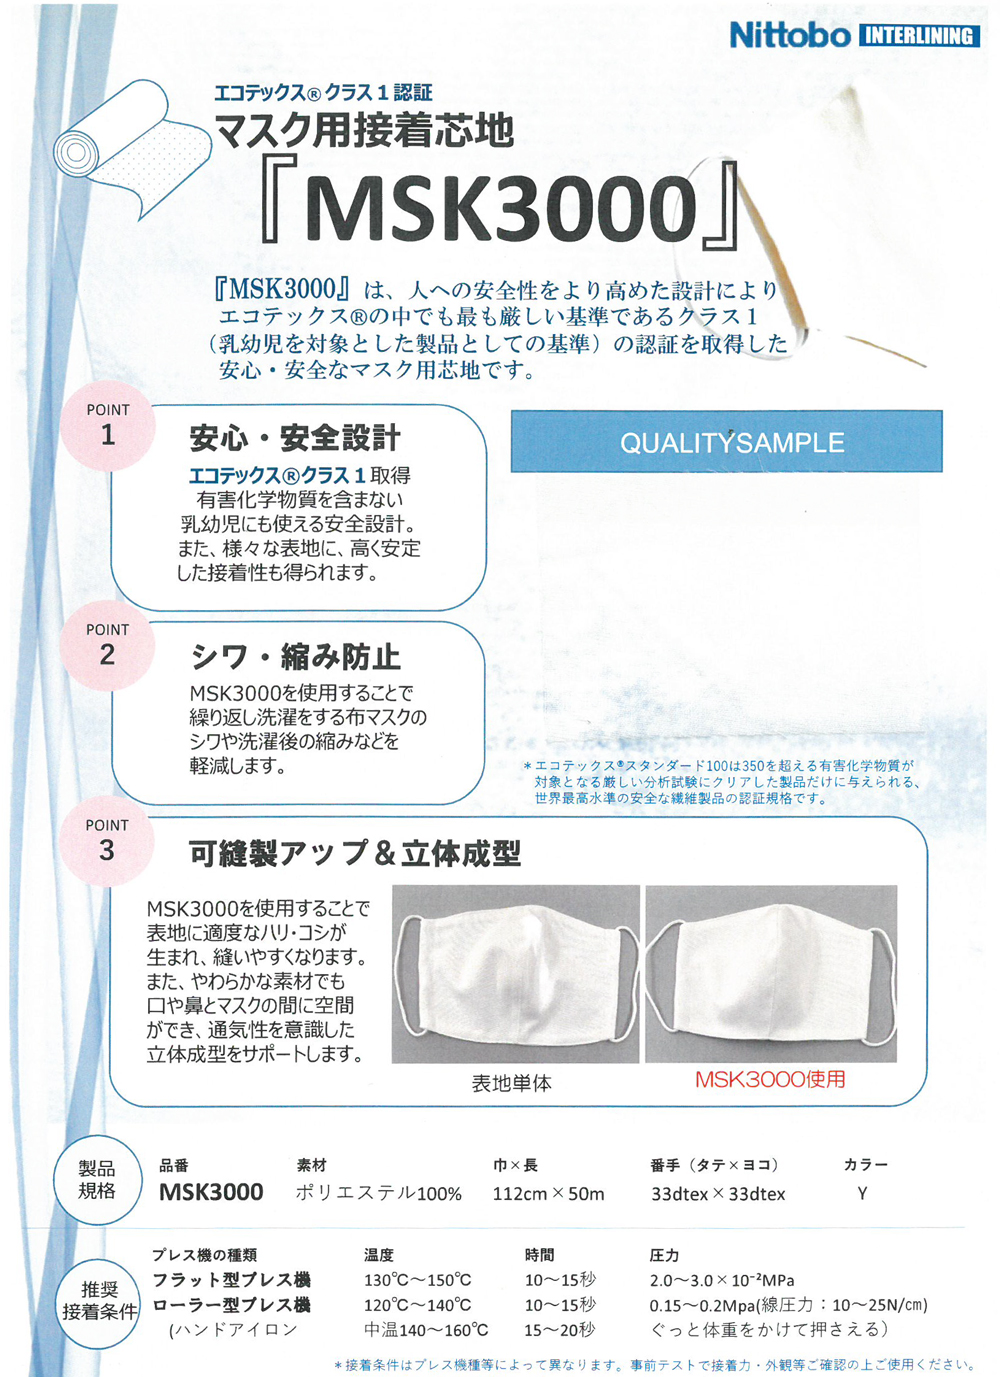 MSK3000 Entoilage Thermocollant Certifié Ecotex® Standard 100 Pour Masques Nittobo